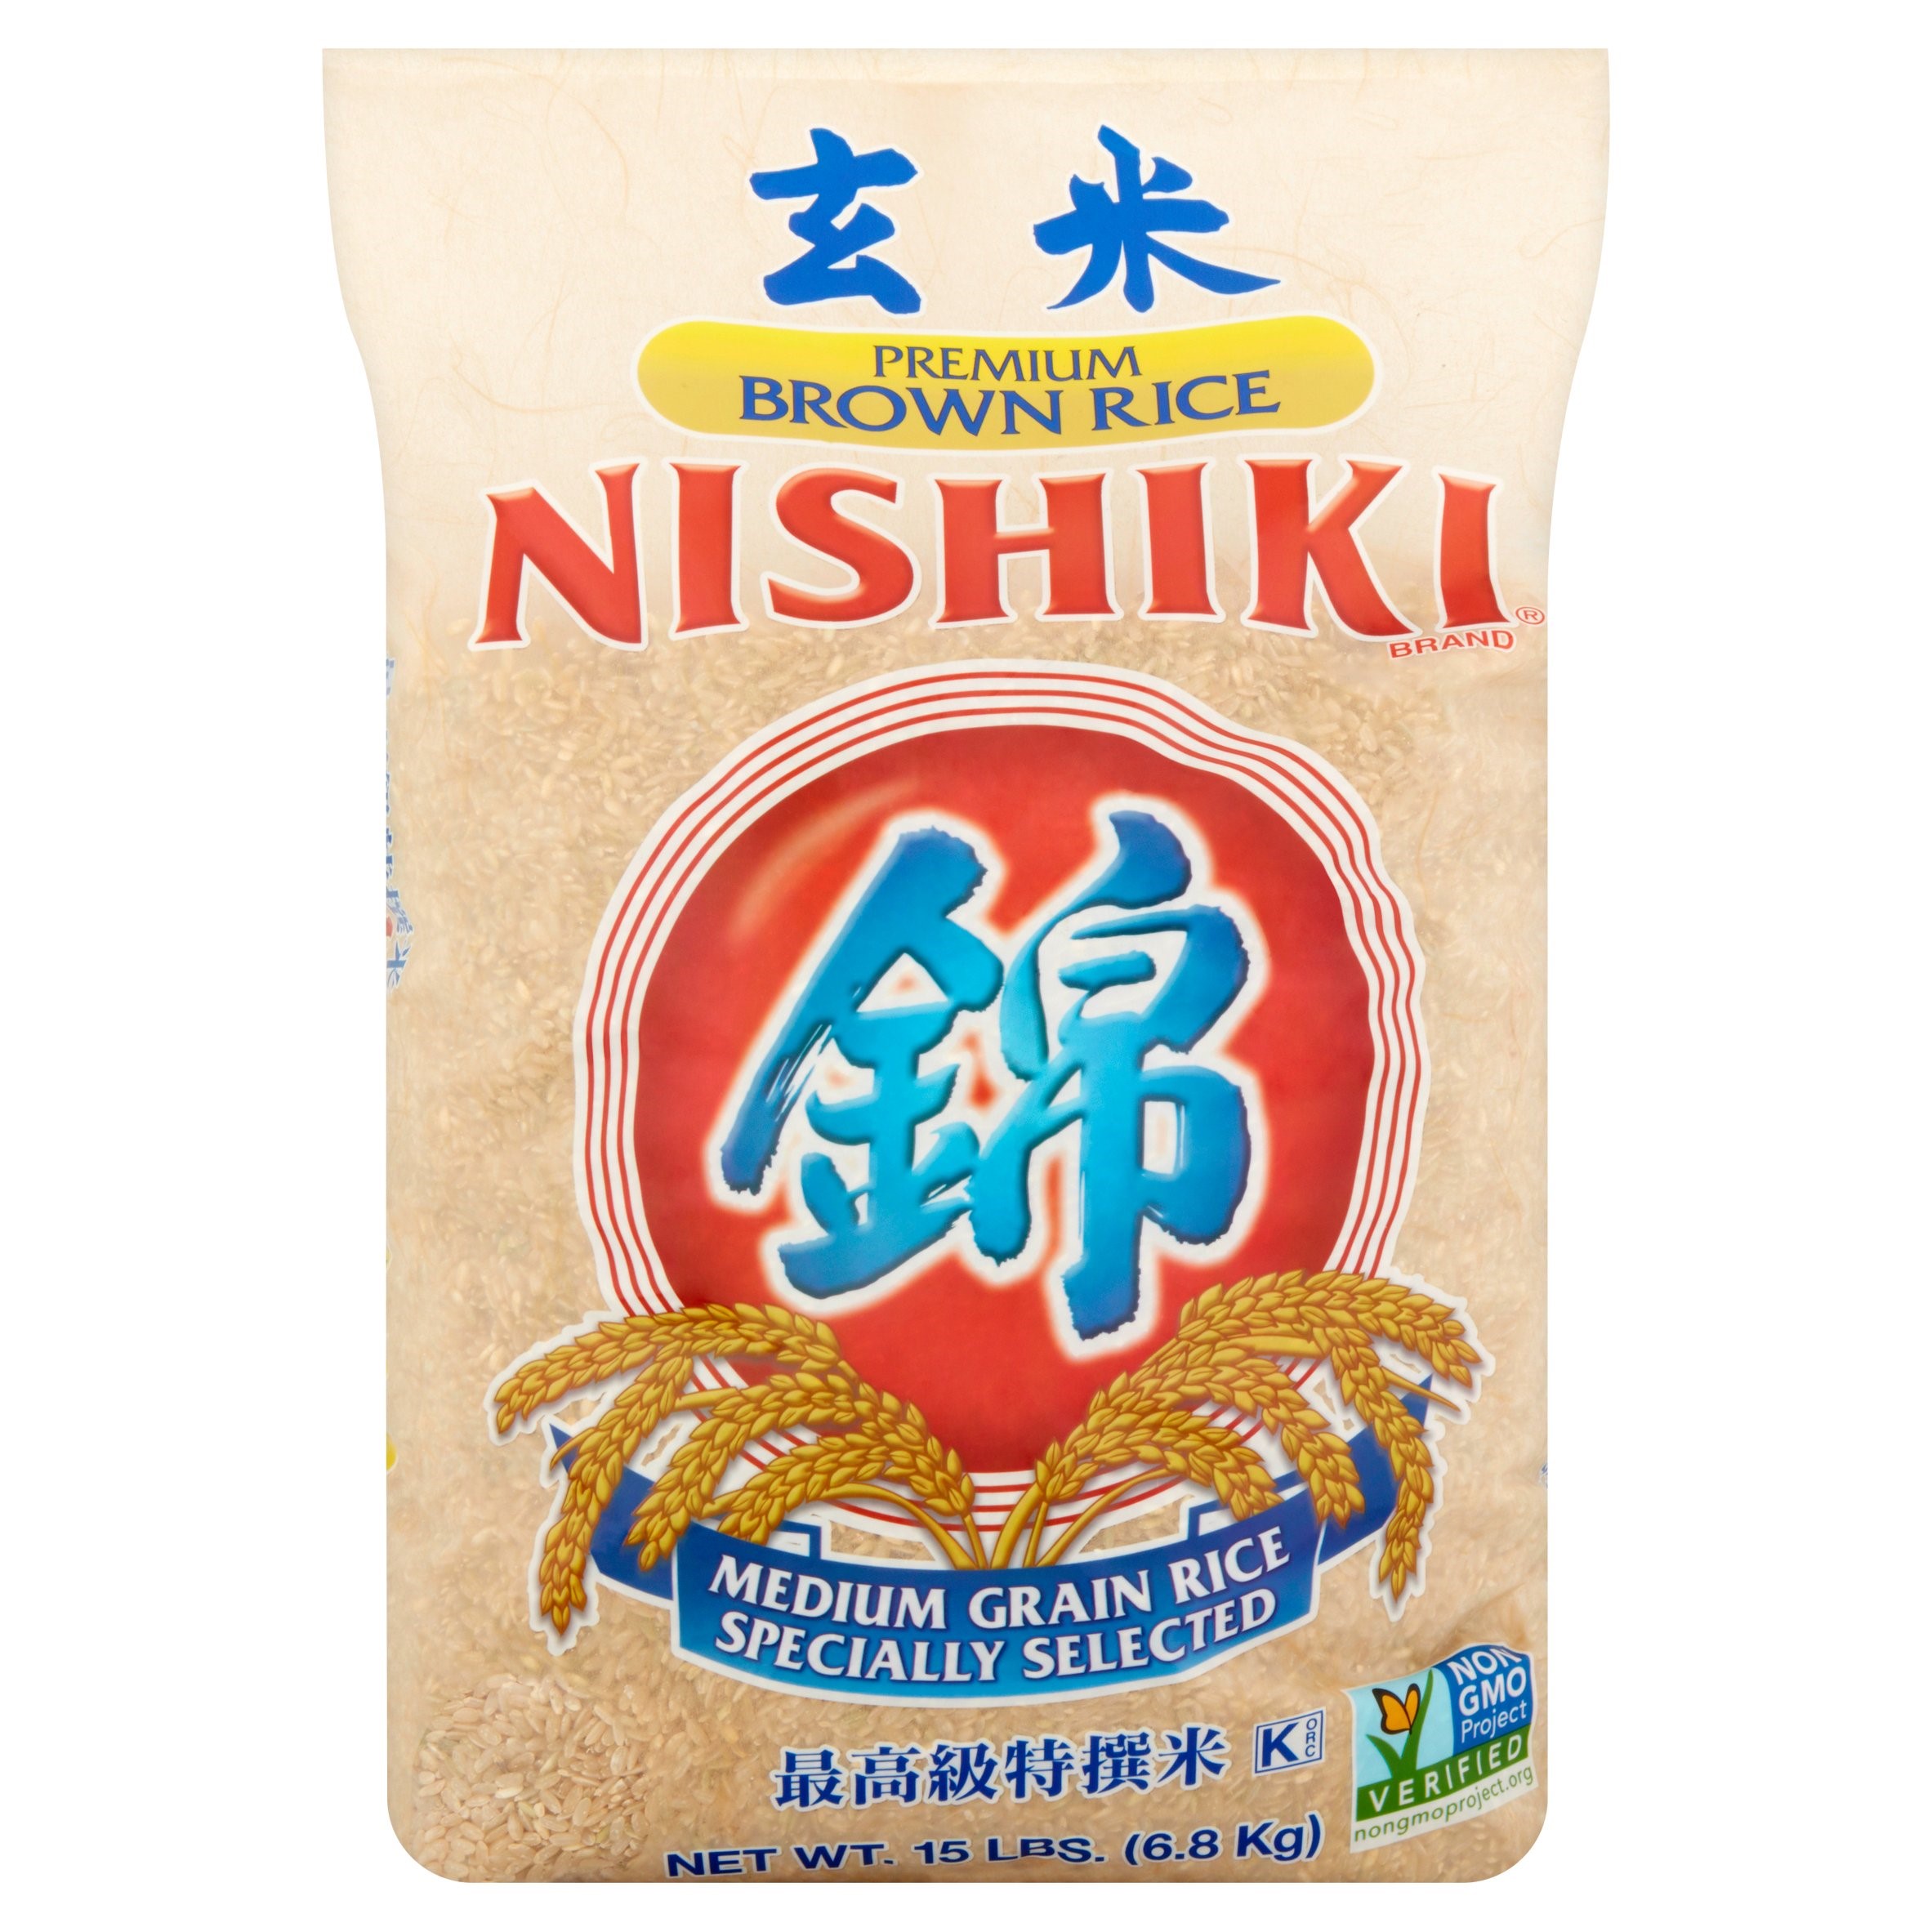 Nishiki Premium Brown Rice, 15 lb - image 1 of 5